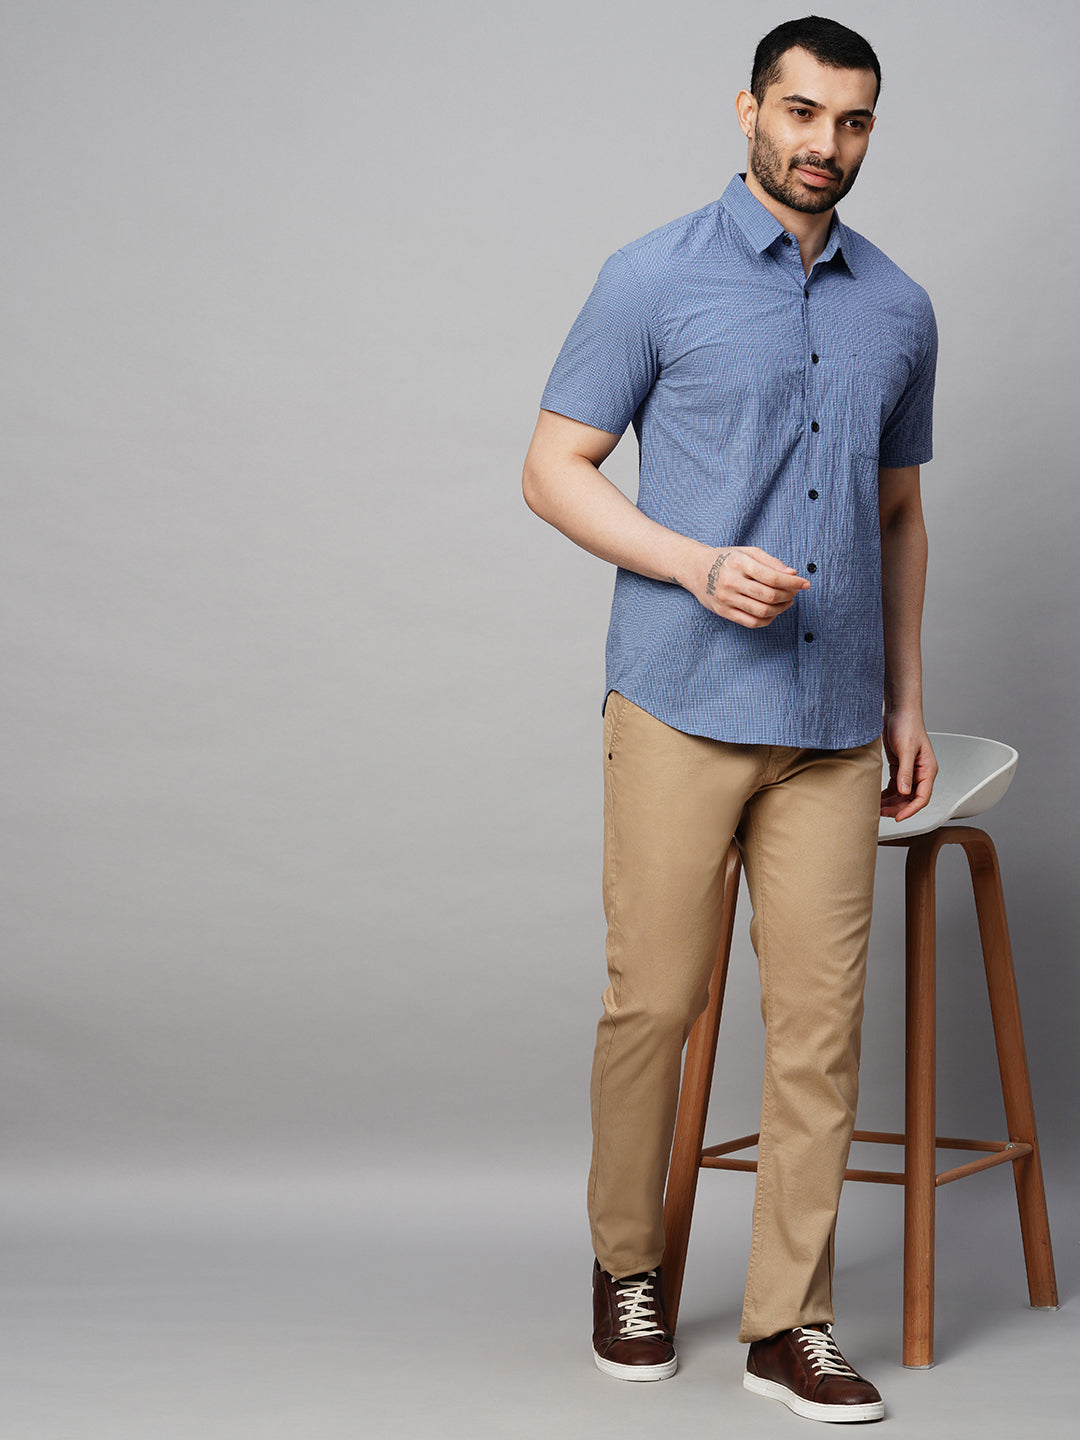 Men's Blue Cotton Lycra Regular Fit Checked Shirt